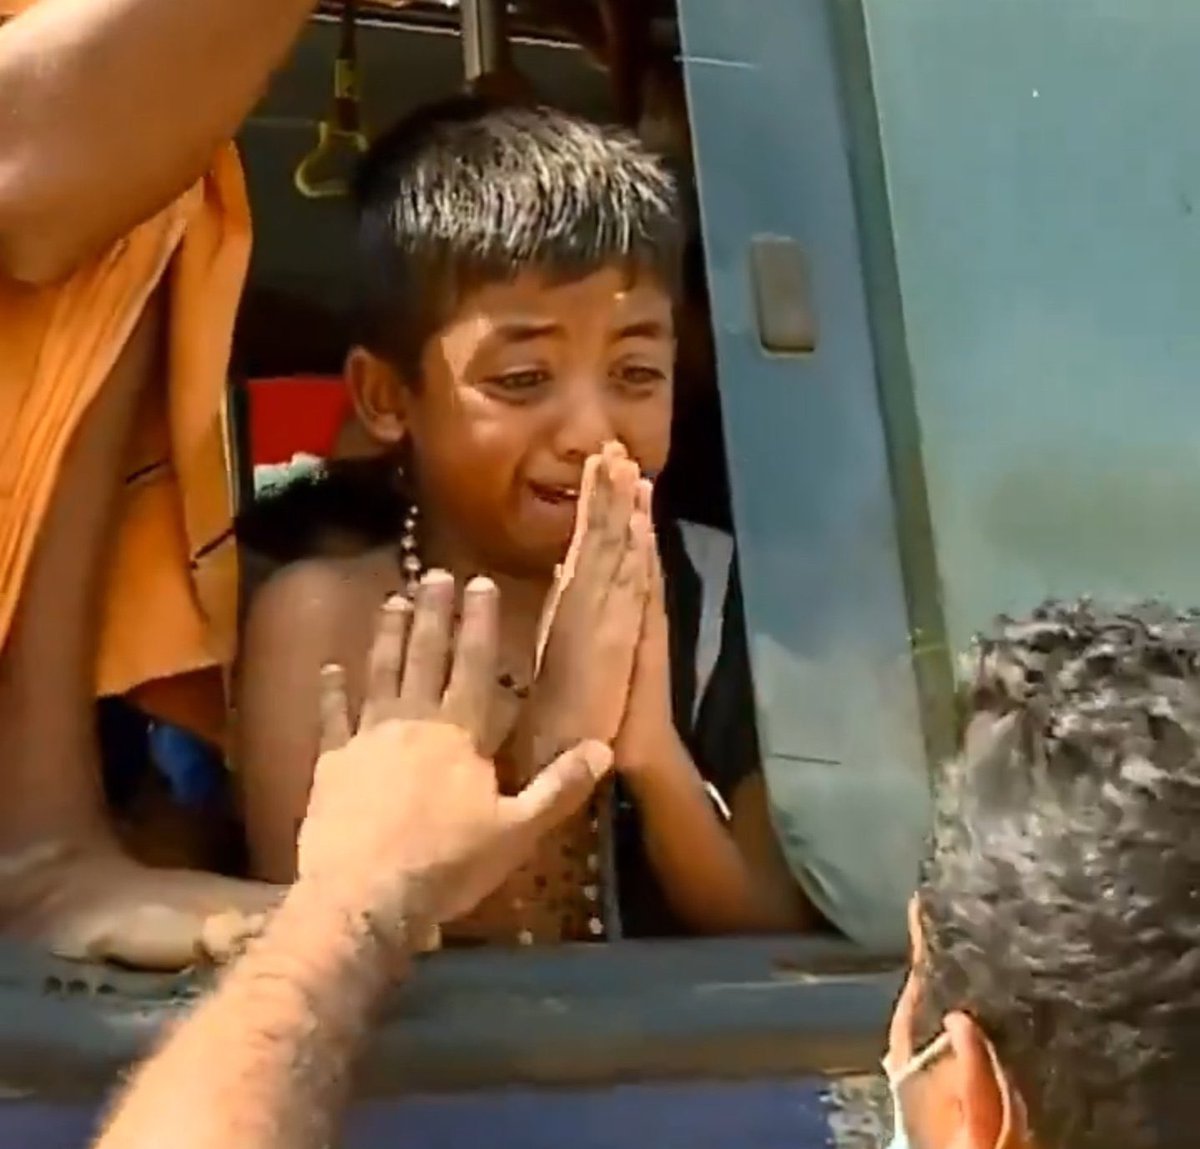 इस तस्वीर ने सबको रुला दिया😭

#HinduLivesMatters #Sabarimala